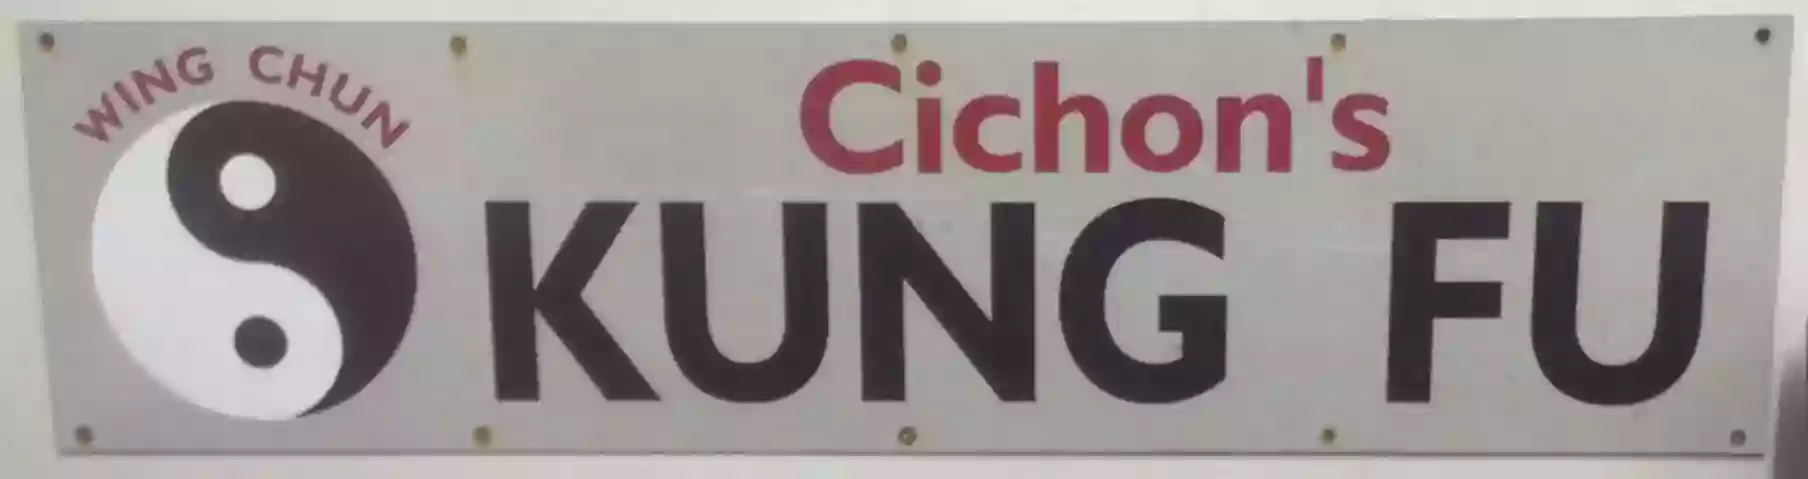 Cichon's Wing Chun Kung Fu